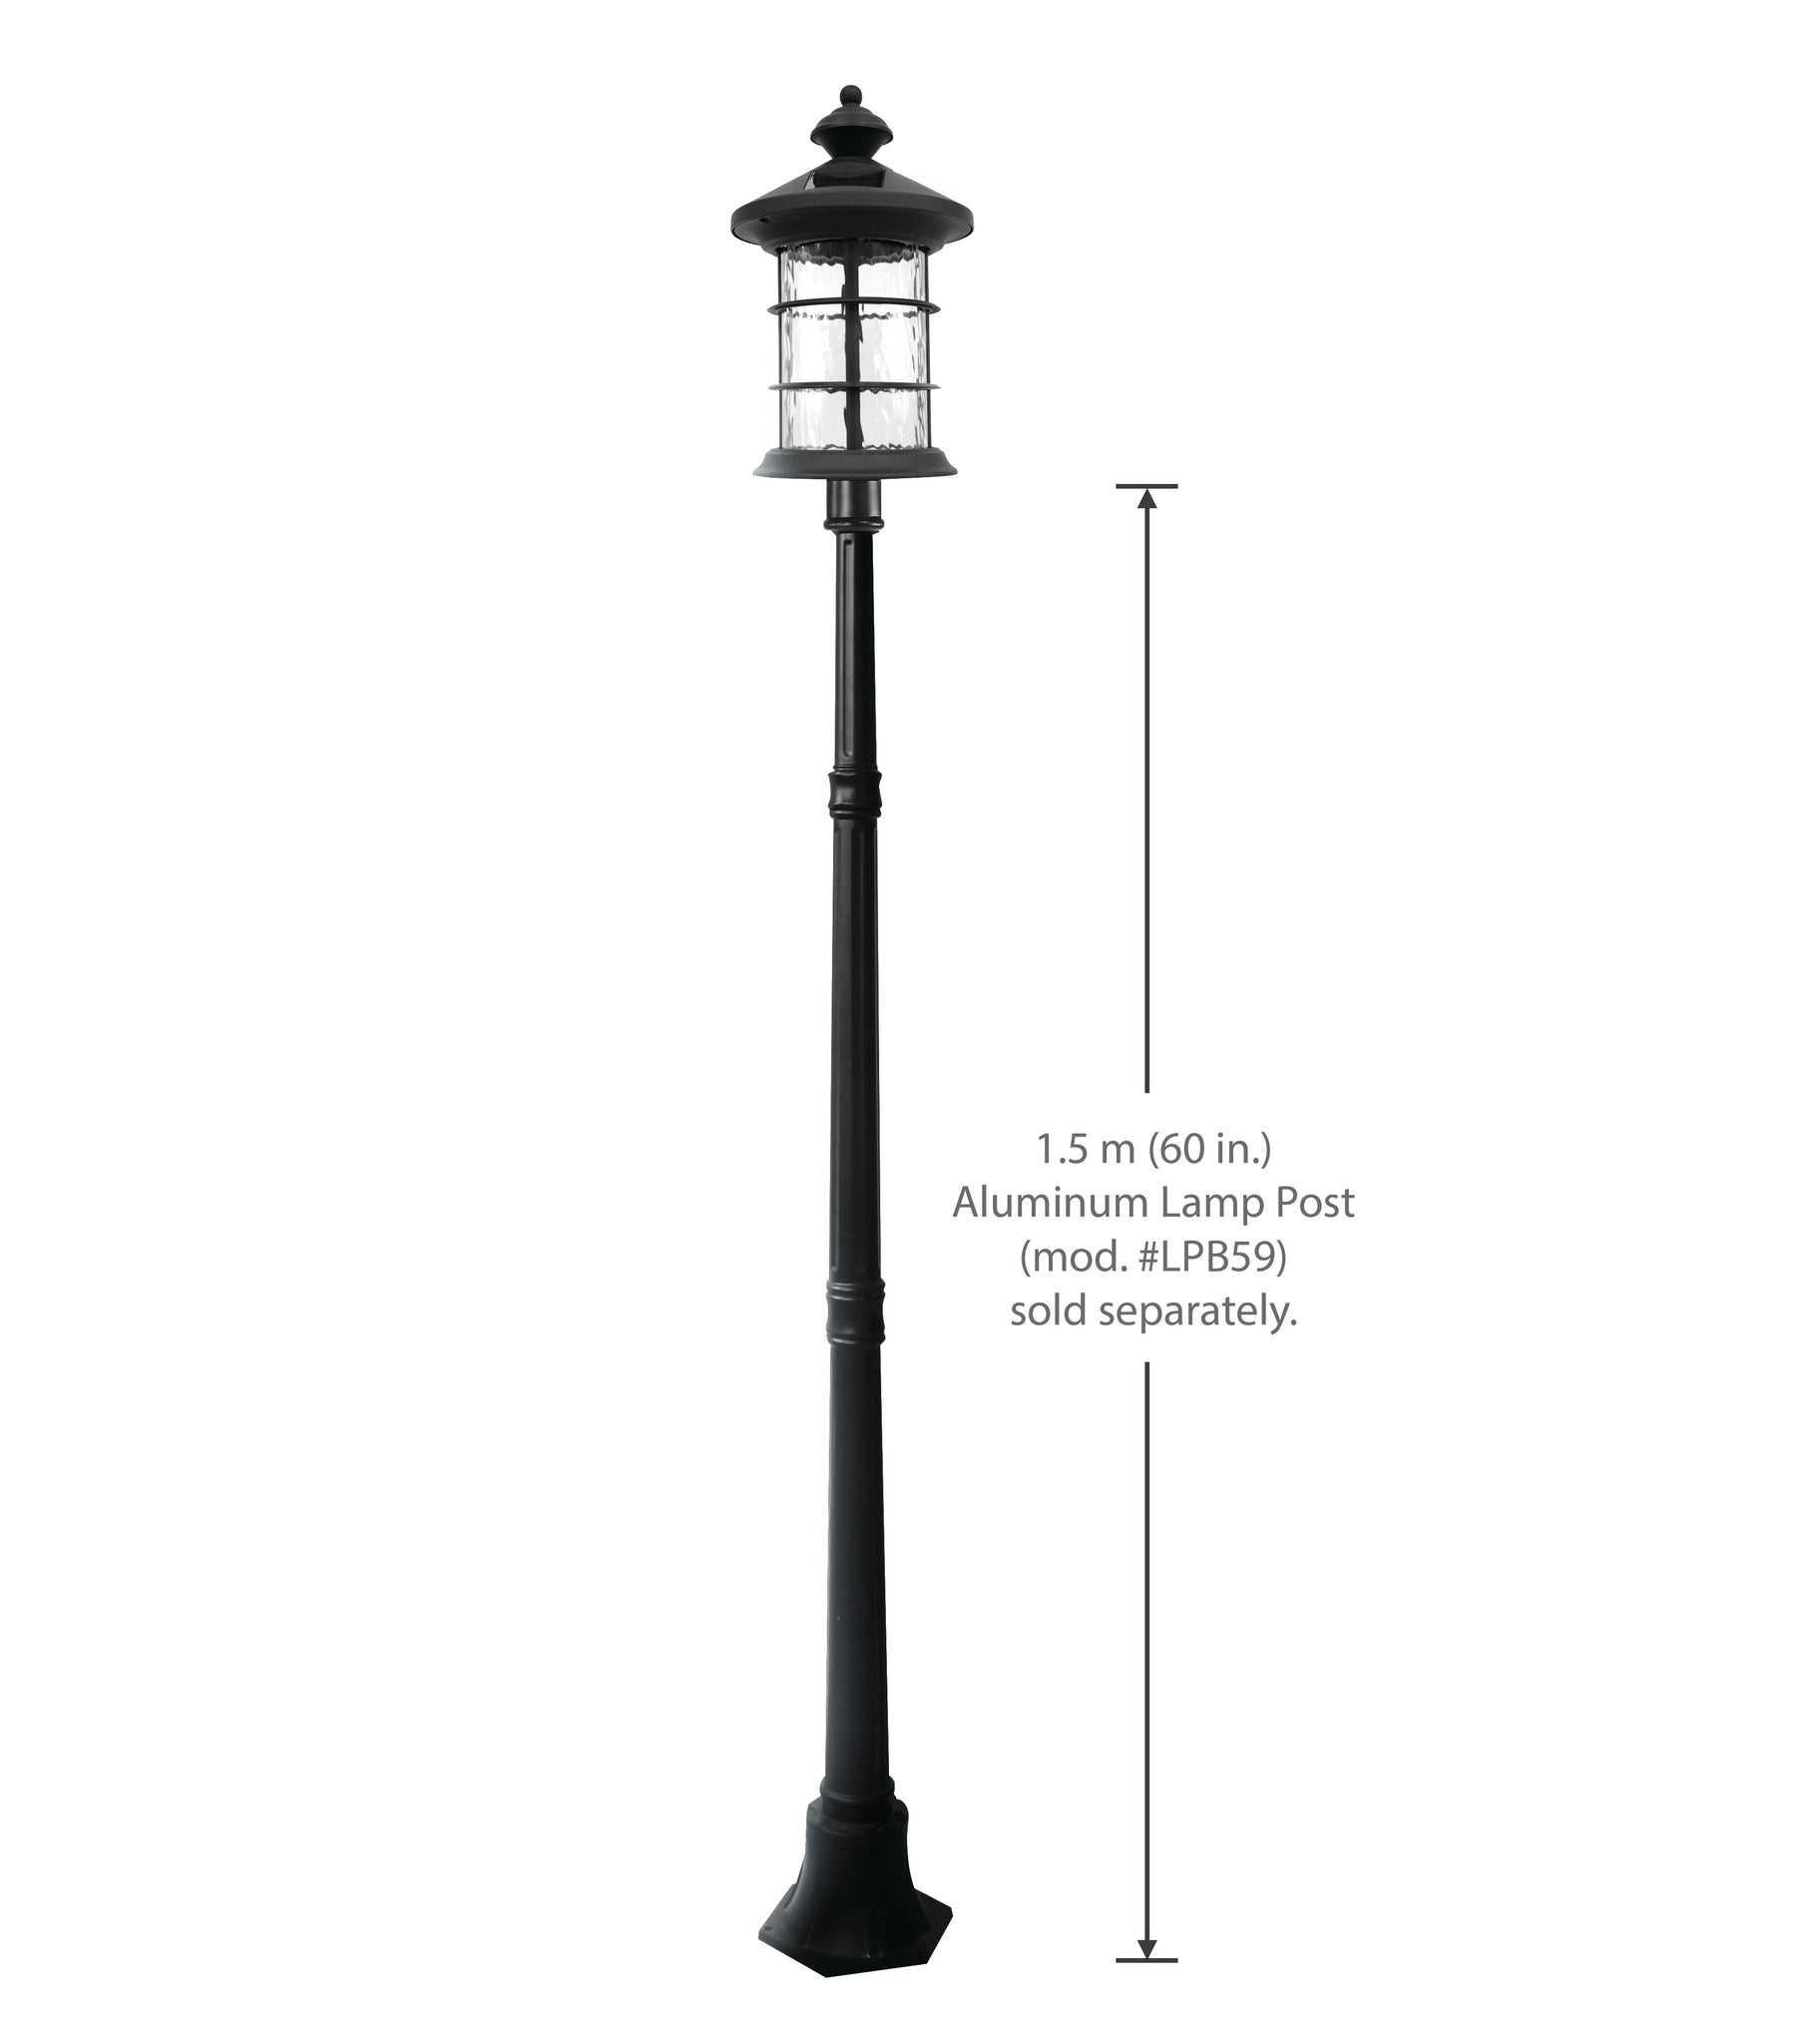 Classy Caps - Aluminum Lamp Post Base, Black-LPB59 – Quality ...